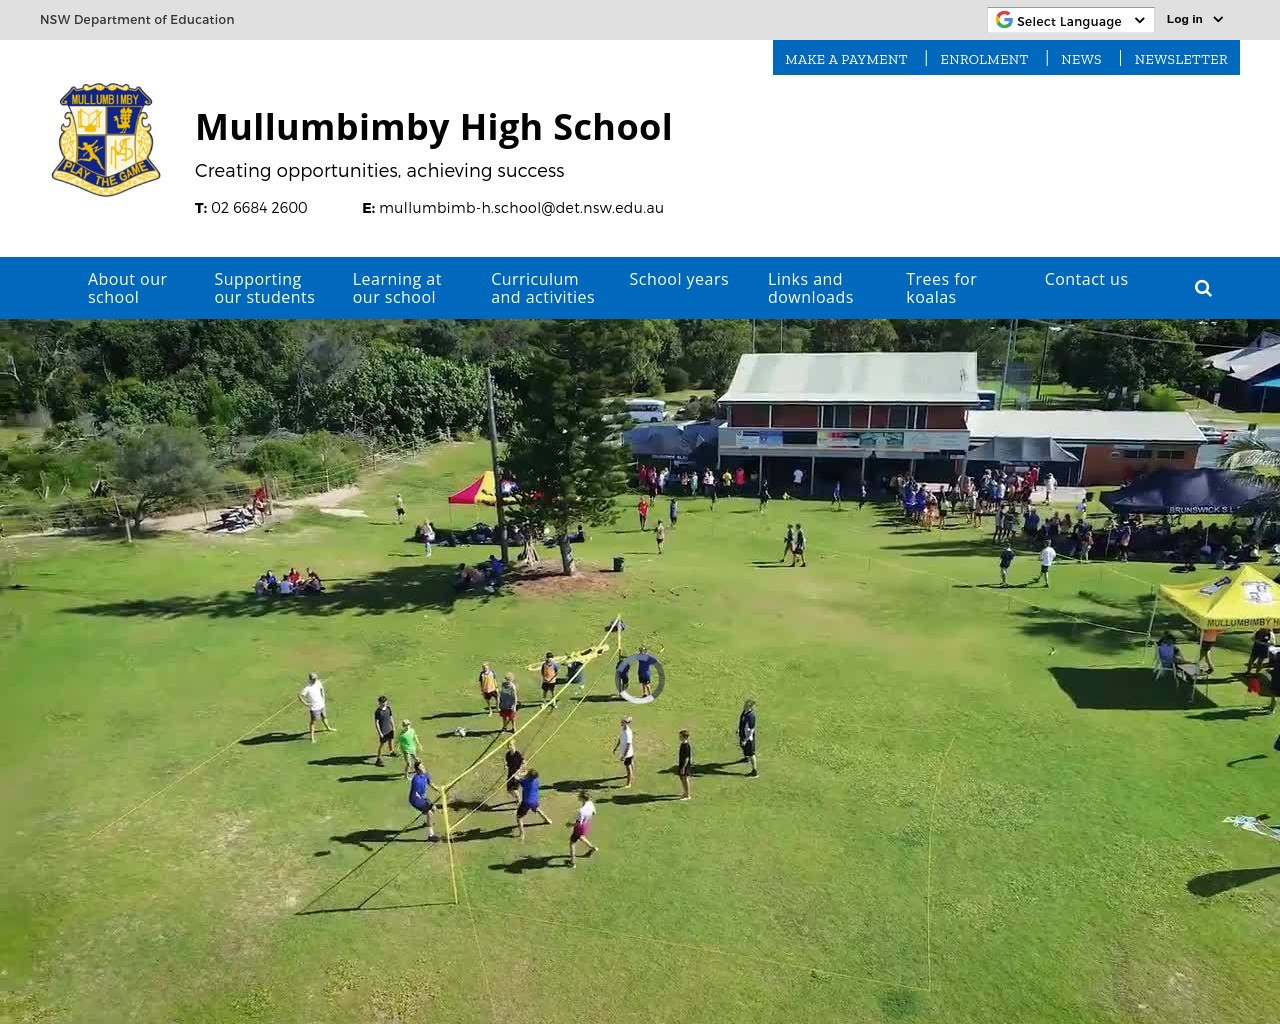 Mullumbimby High School